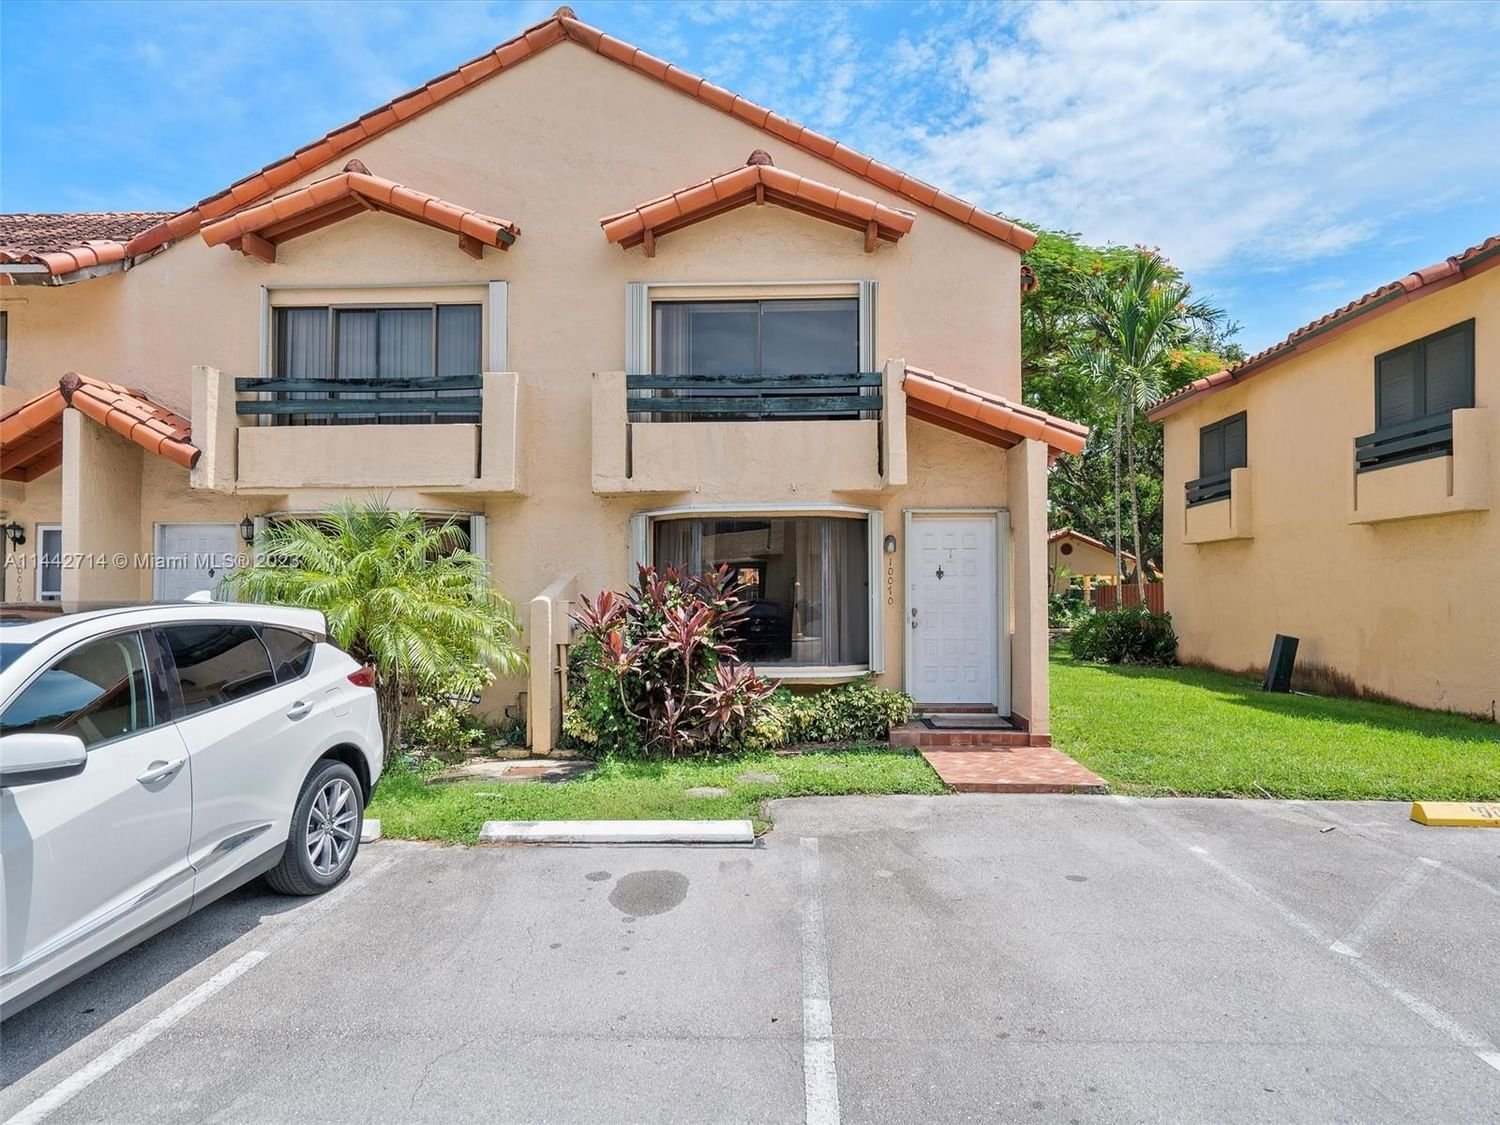 Real estate property located at 10070 77th Ct #10070, Miami-Dade County, Miami, FL